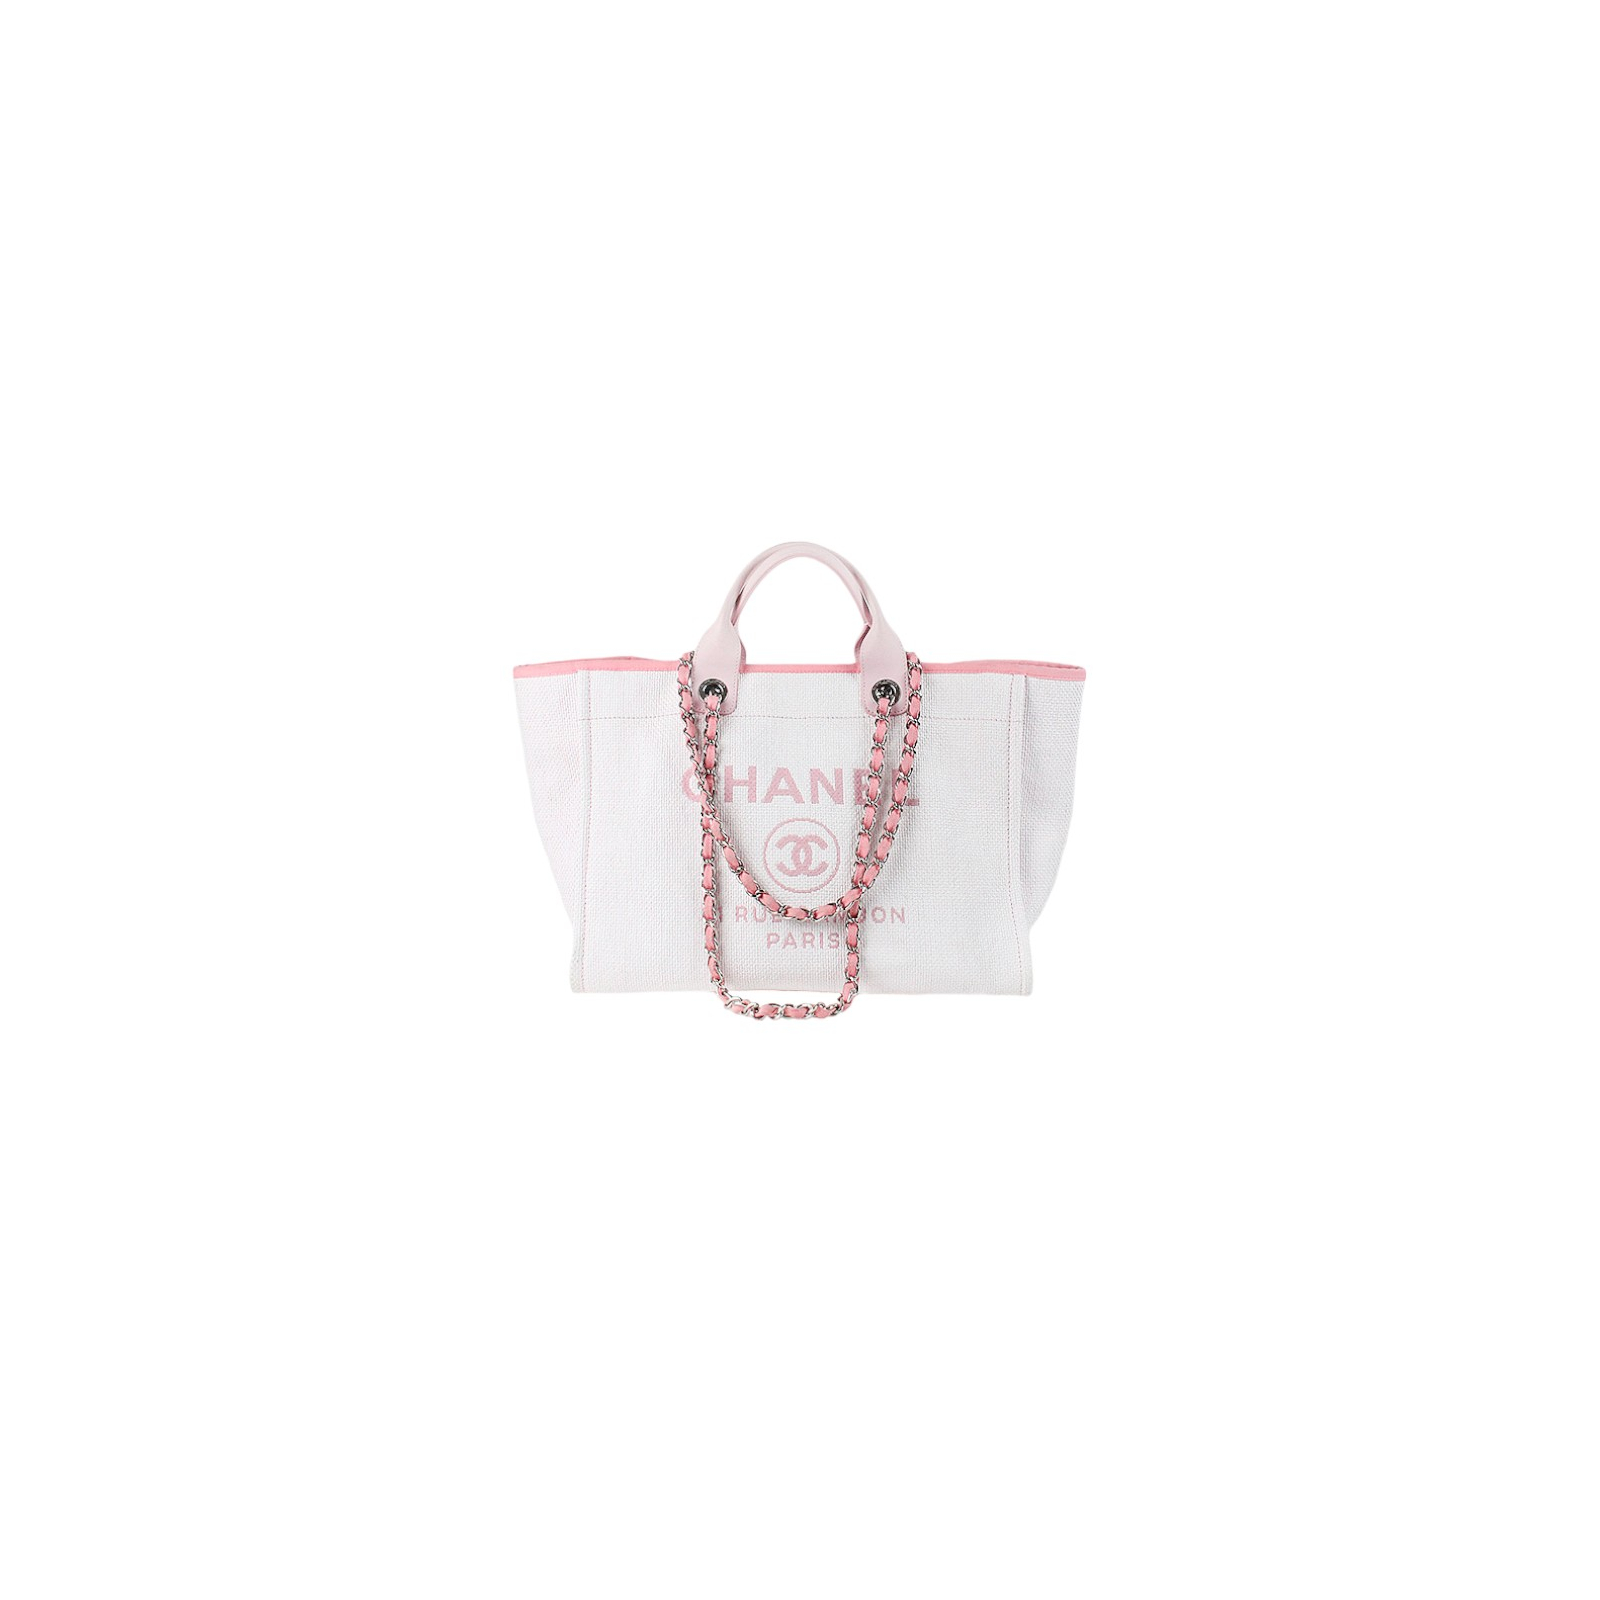 Torba Chanel - shopper bag